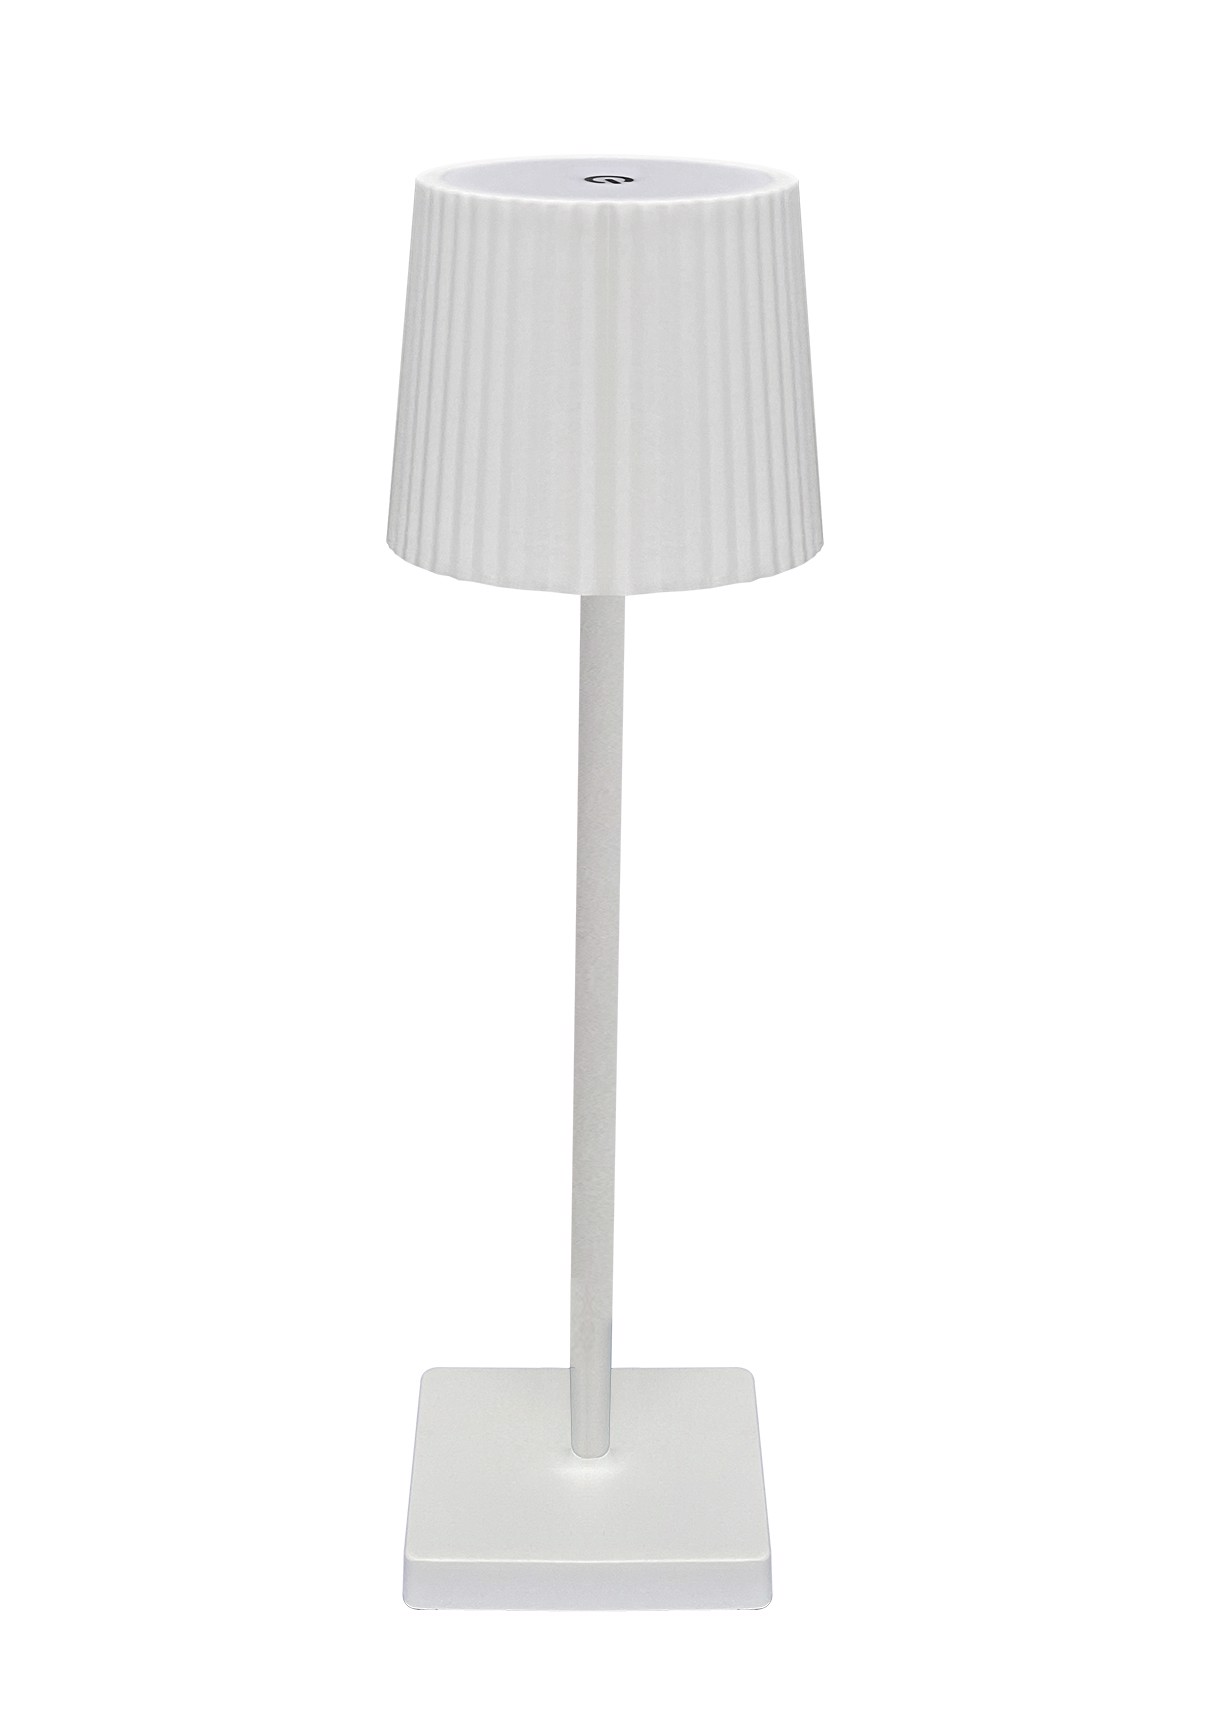 TWEED TW109WHT lampada da tavolo ricaricabile usb LED Bianco, Illuminazione in Offerta su Stay On